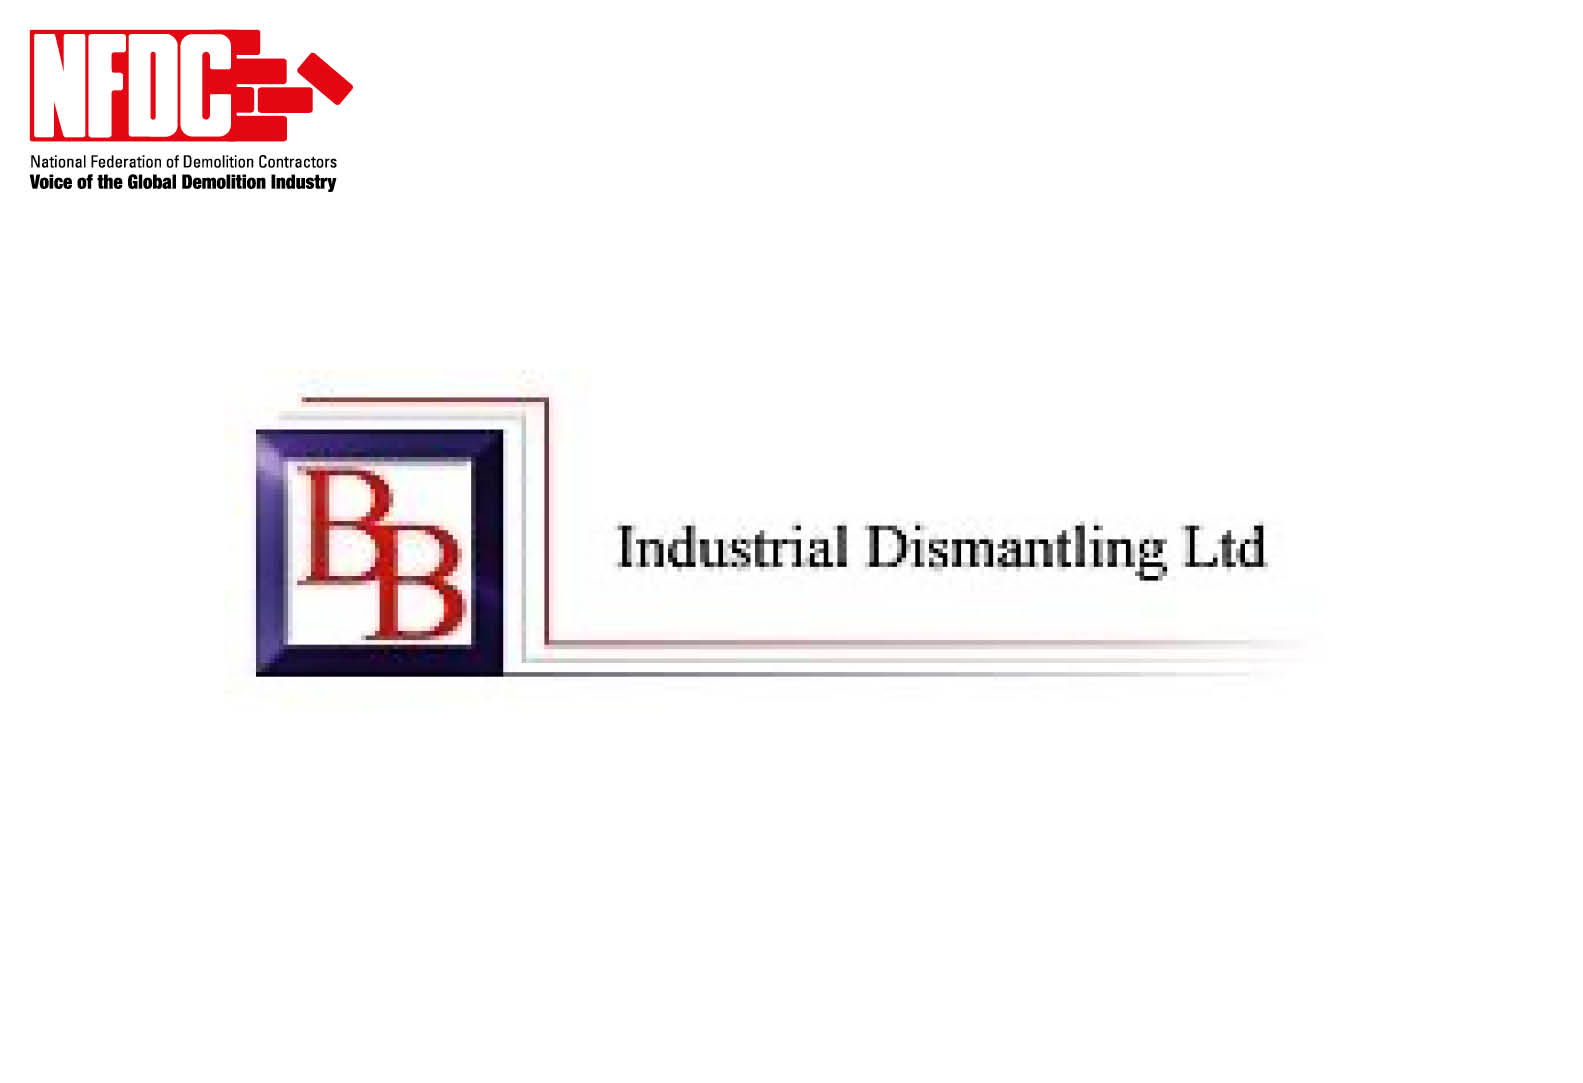 B & B Industrial Dismantling Ltd